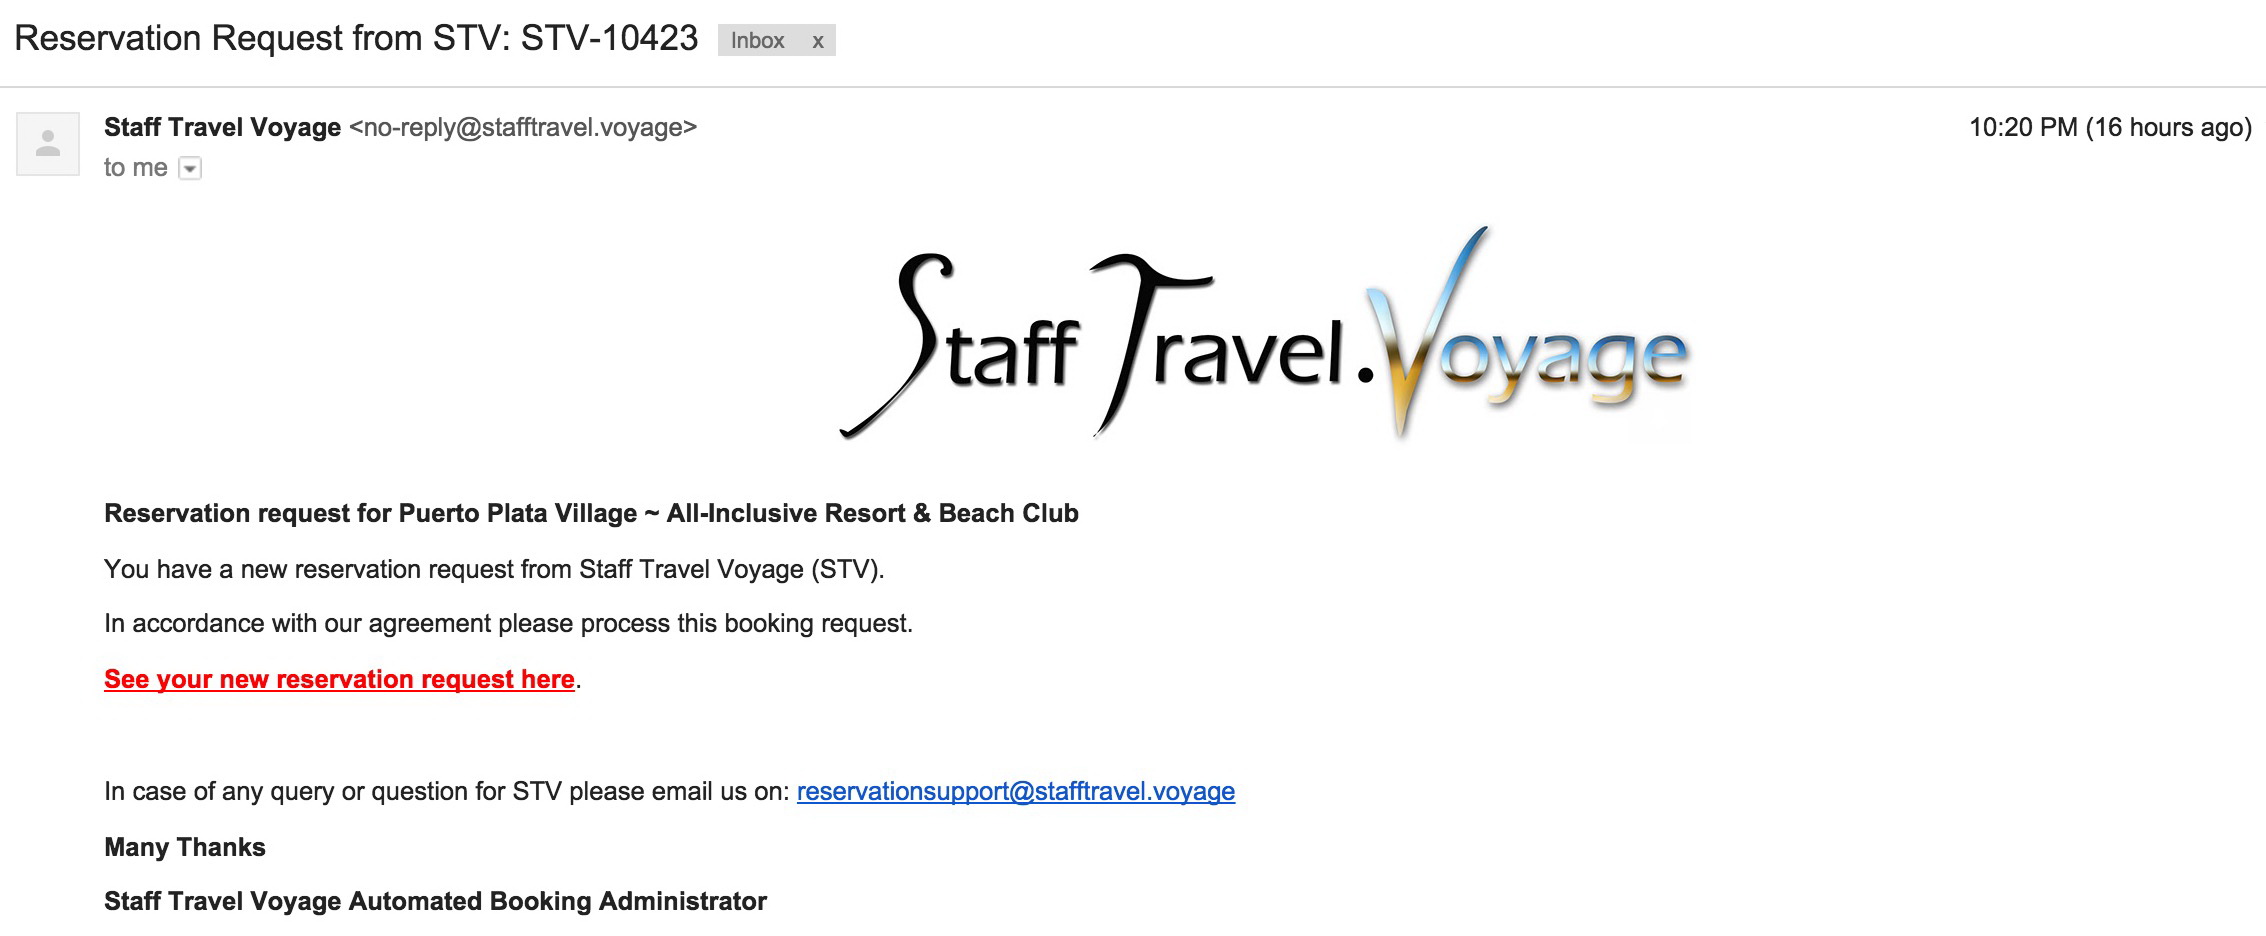 staff travel voyage log in